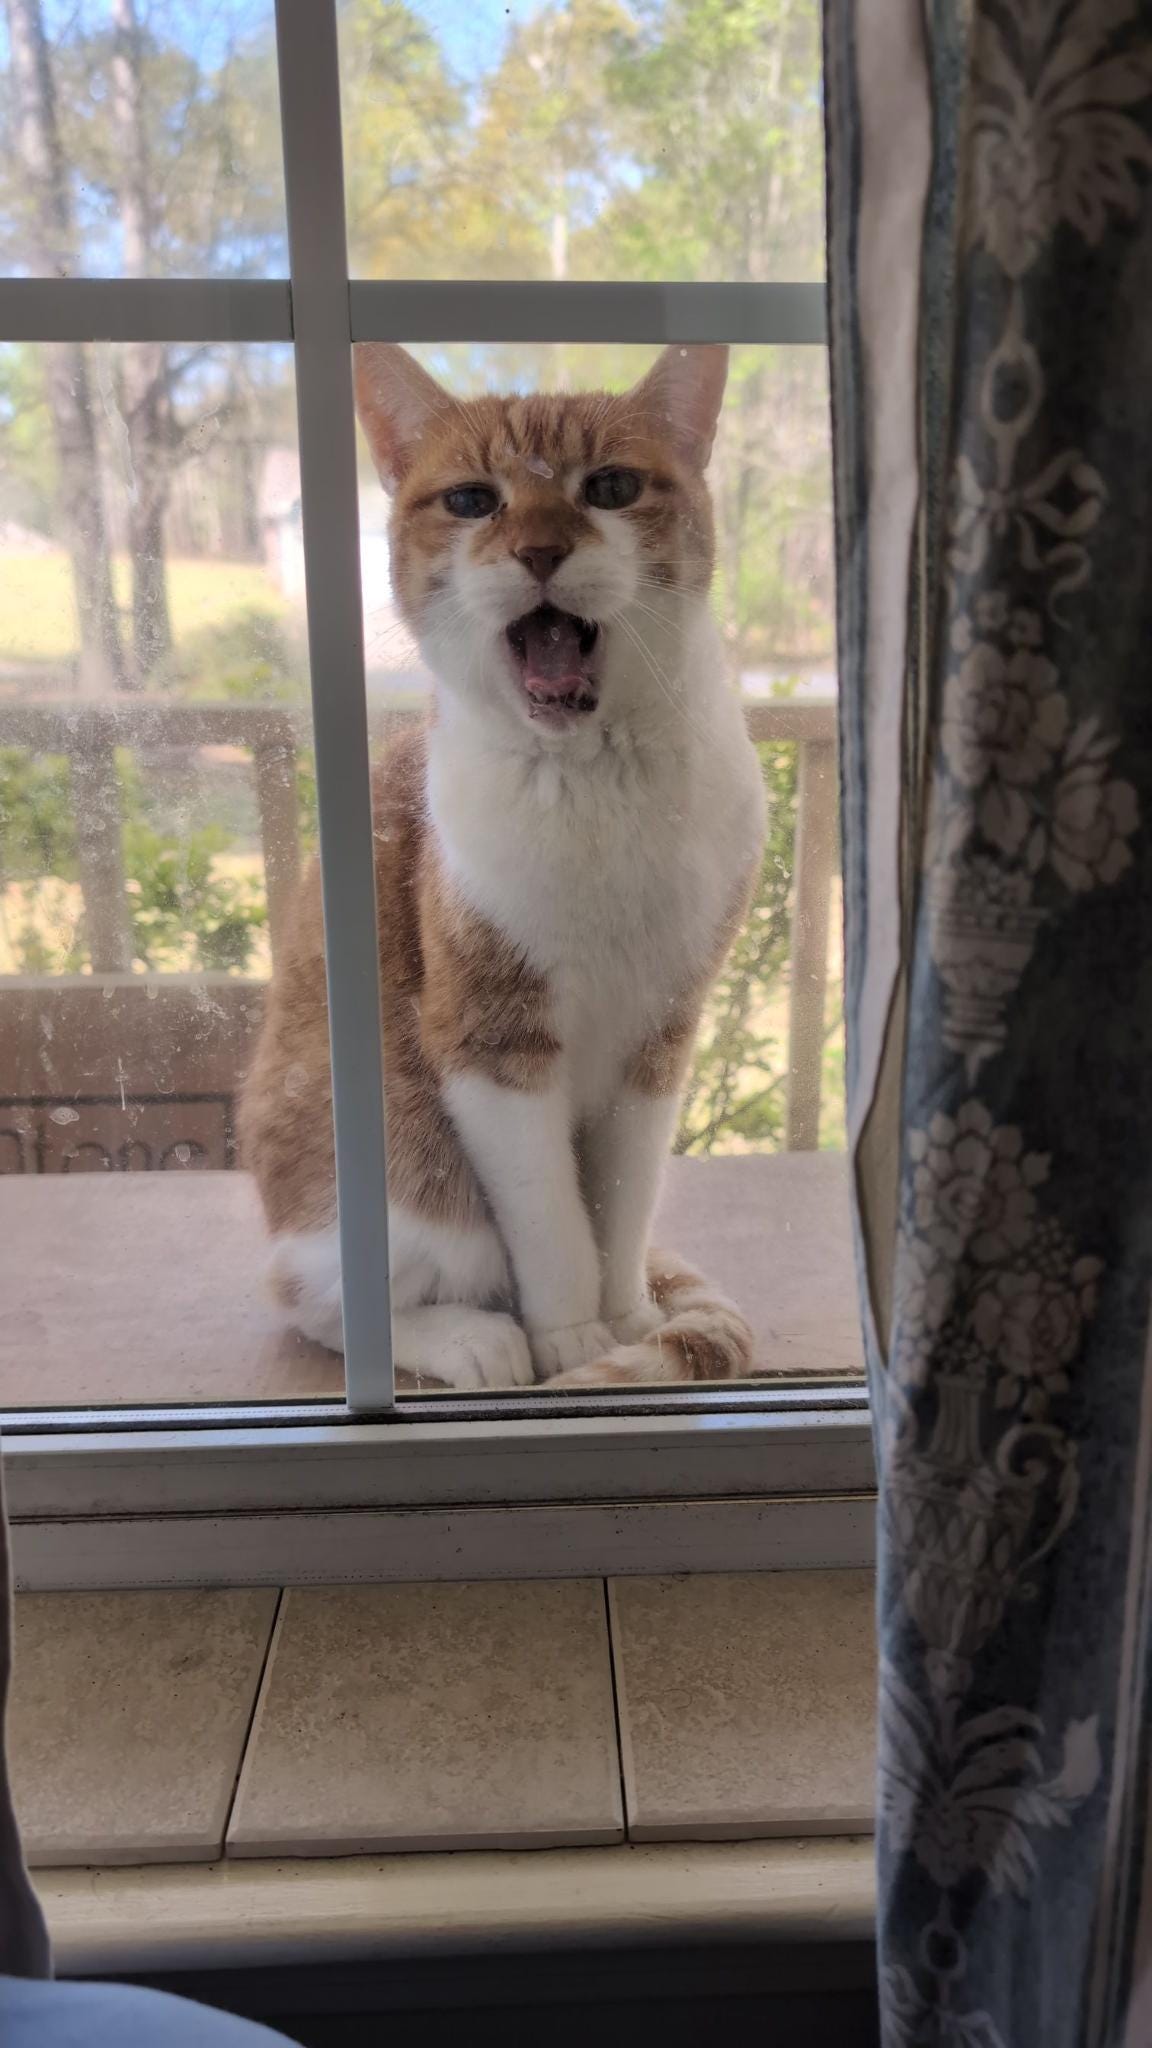 Myo the cat said Hello to everyone!